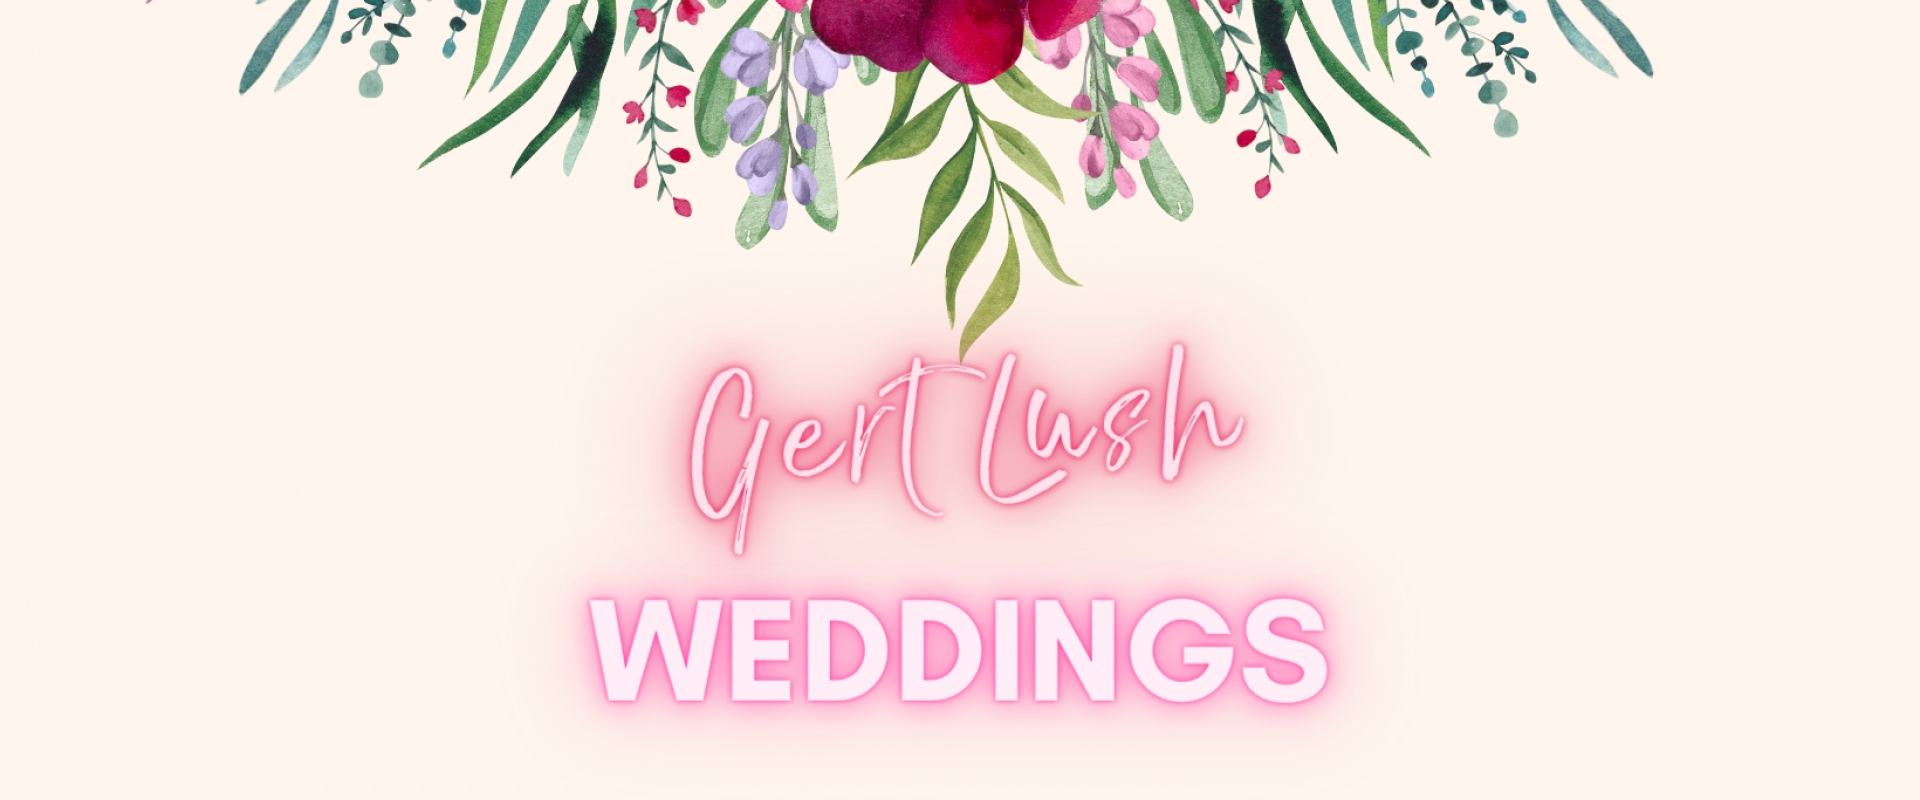 Gert Lush Weddings at The Gables Hotel 1 1